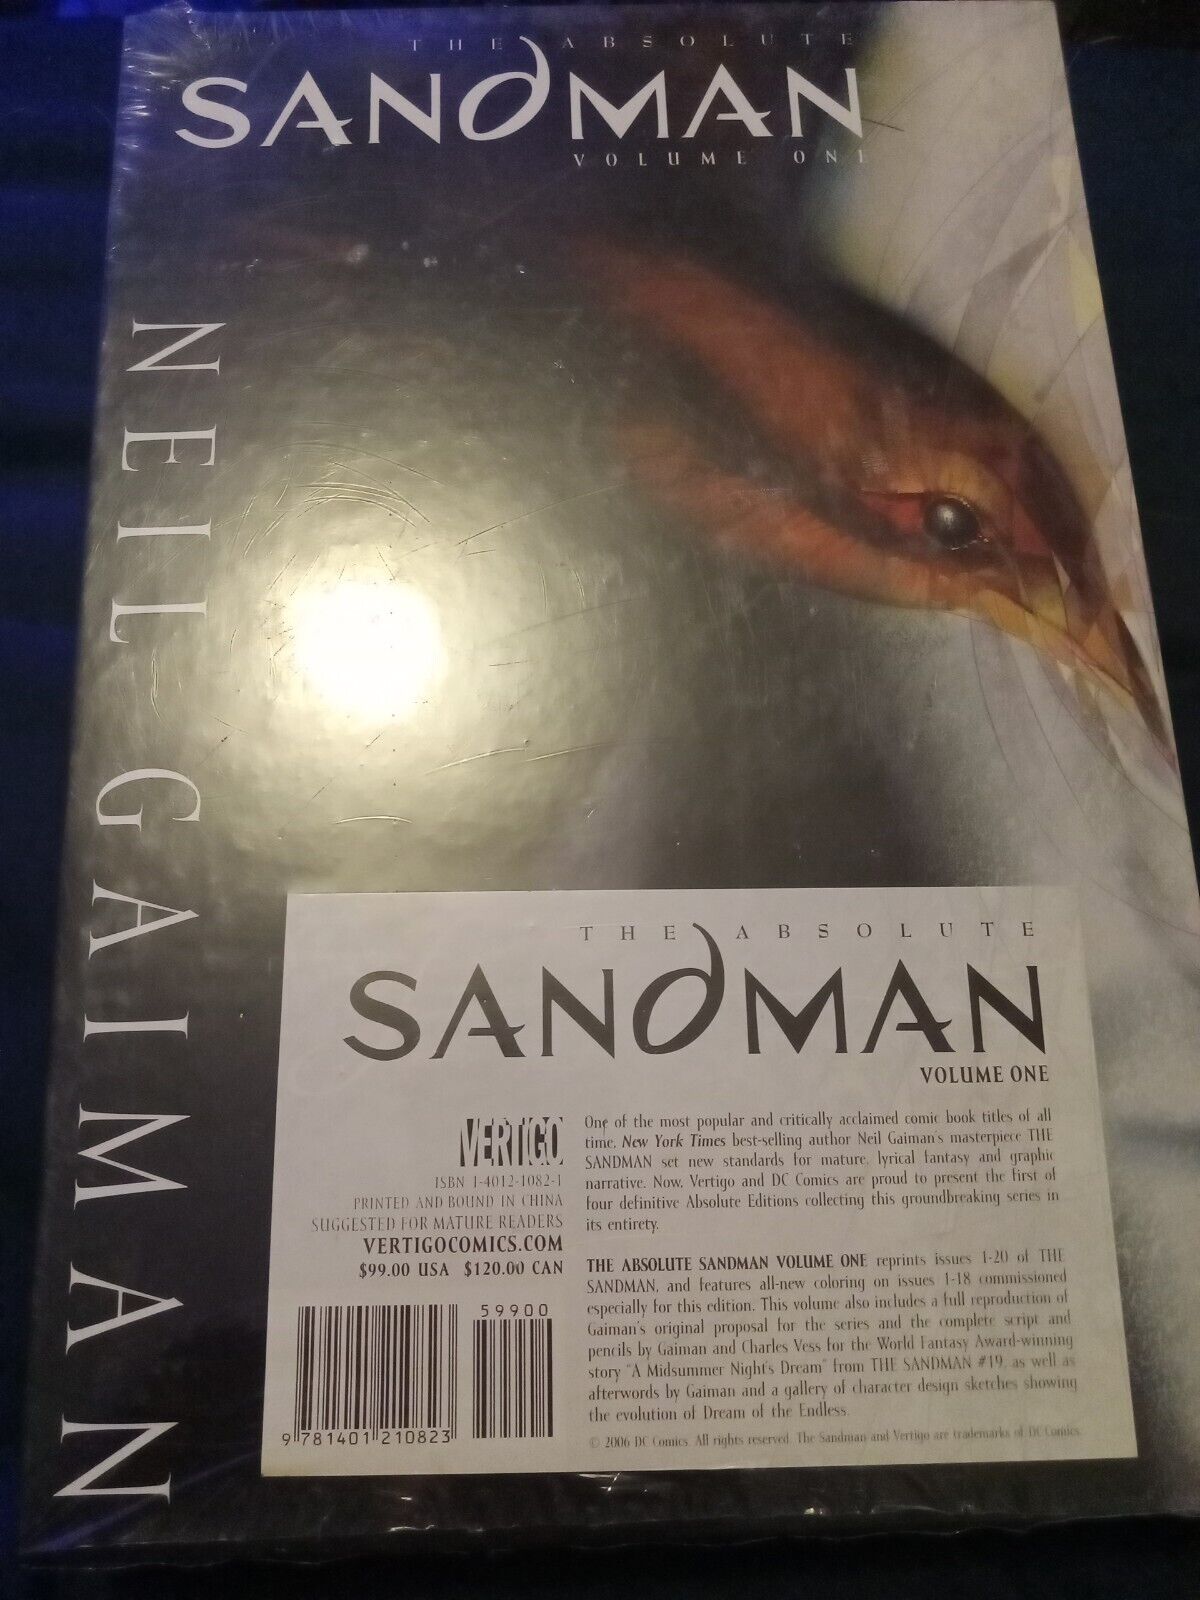 Absolute Sandman Volume One 1 by Neil Gaiman (2006, Hardcover) New Sealed